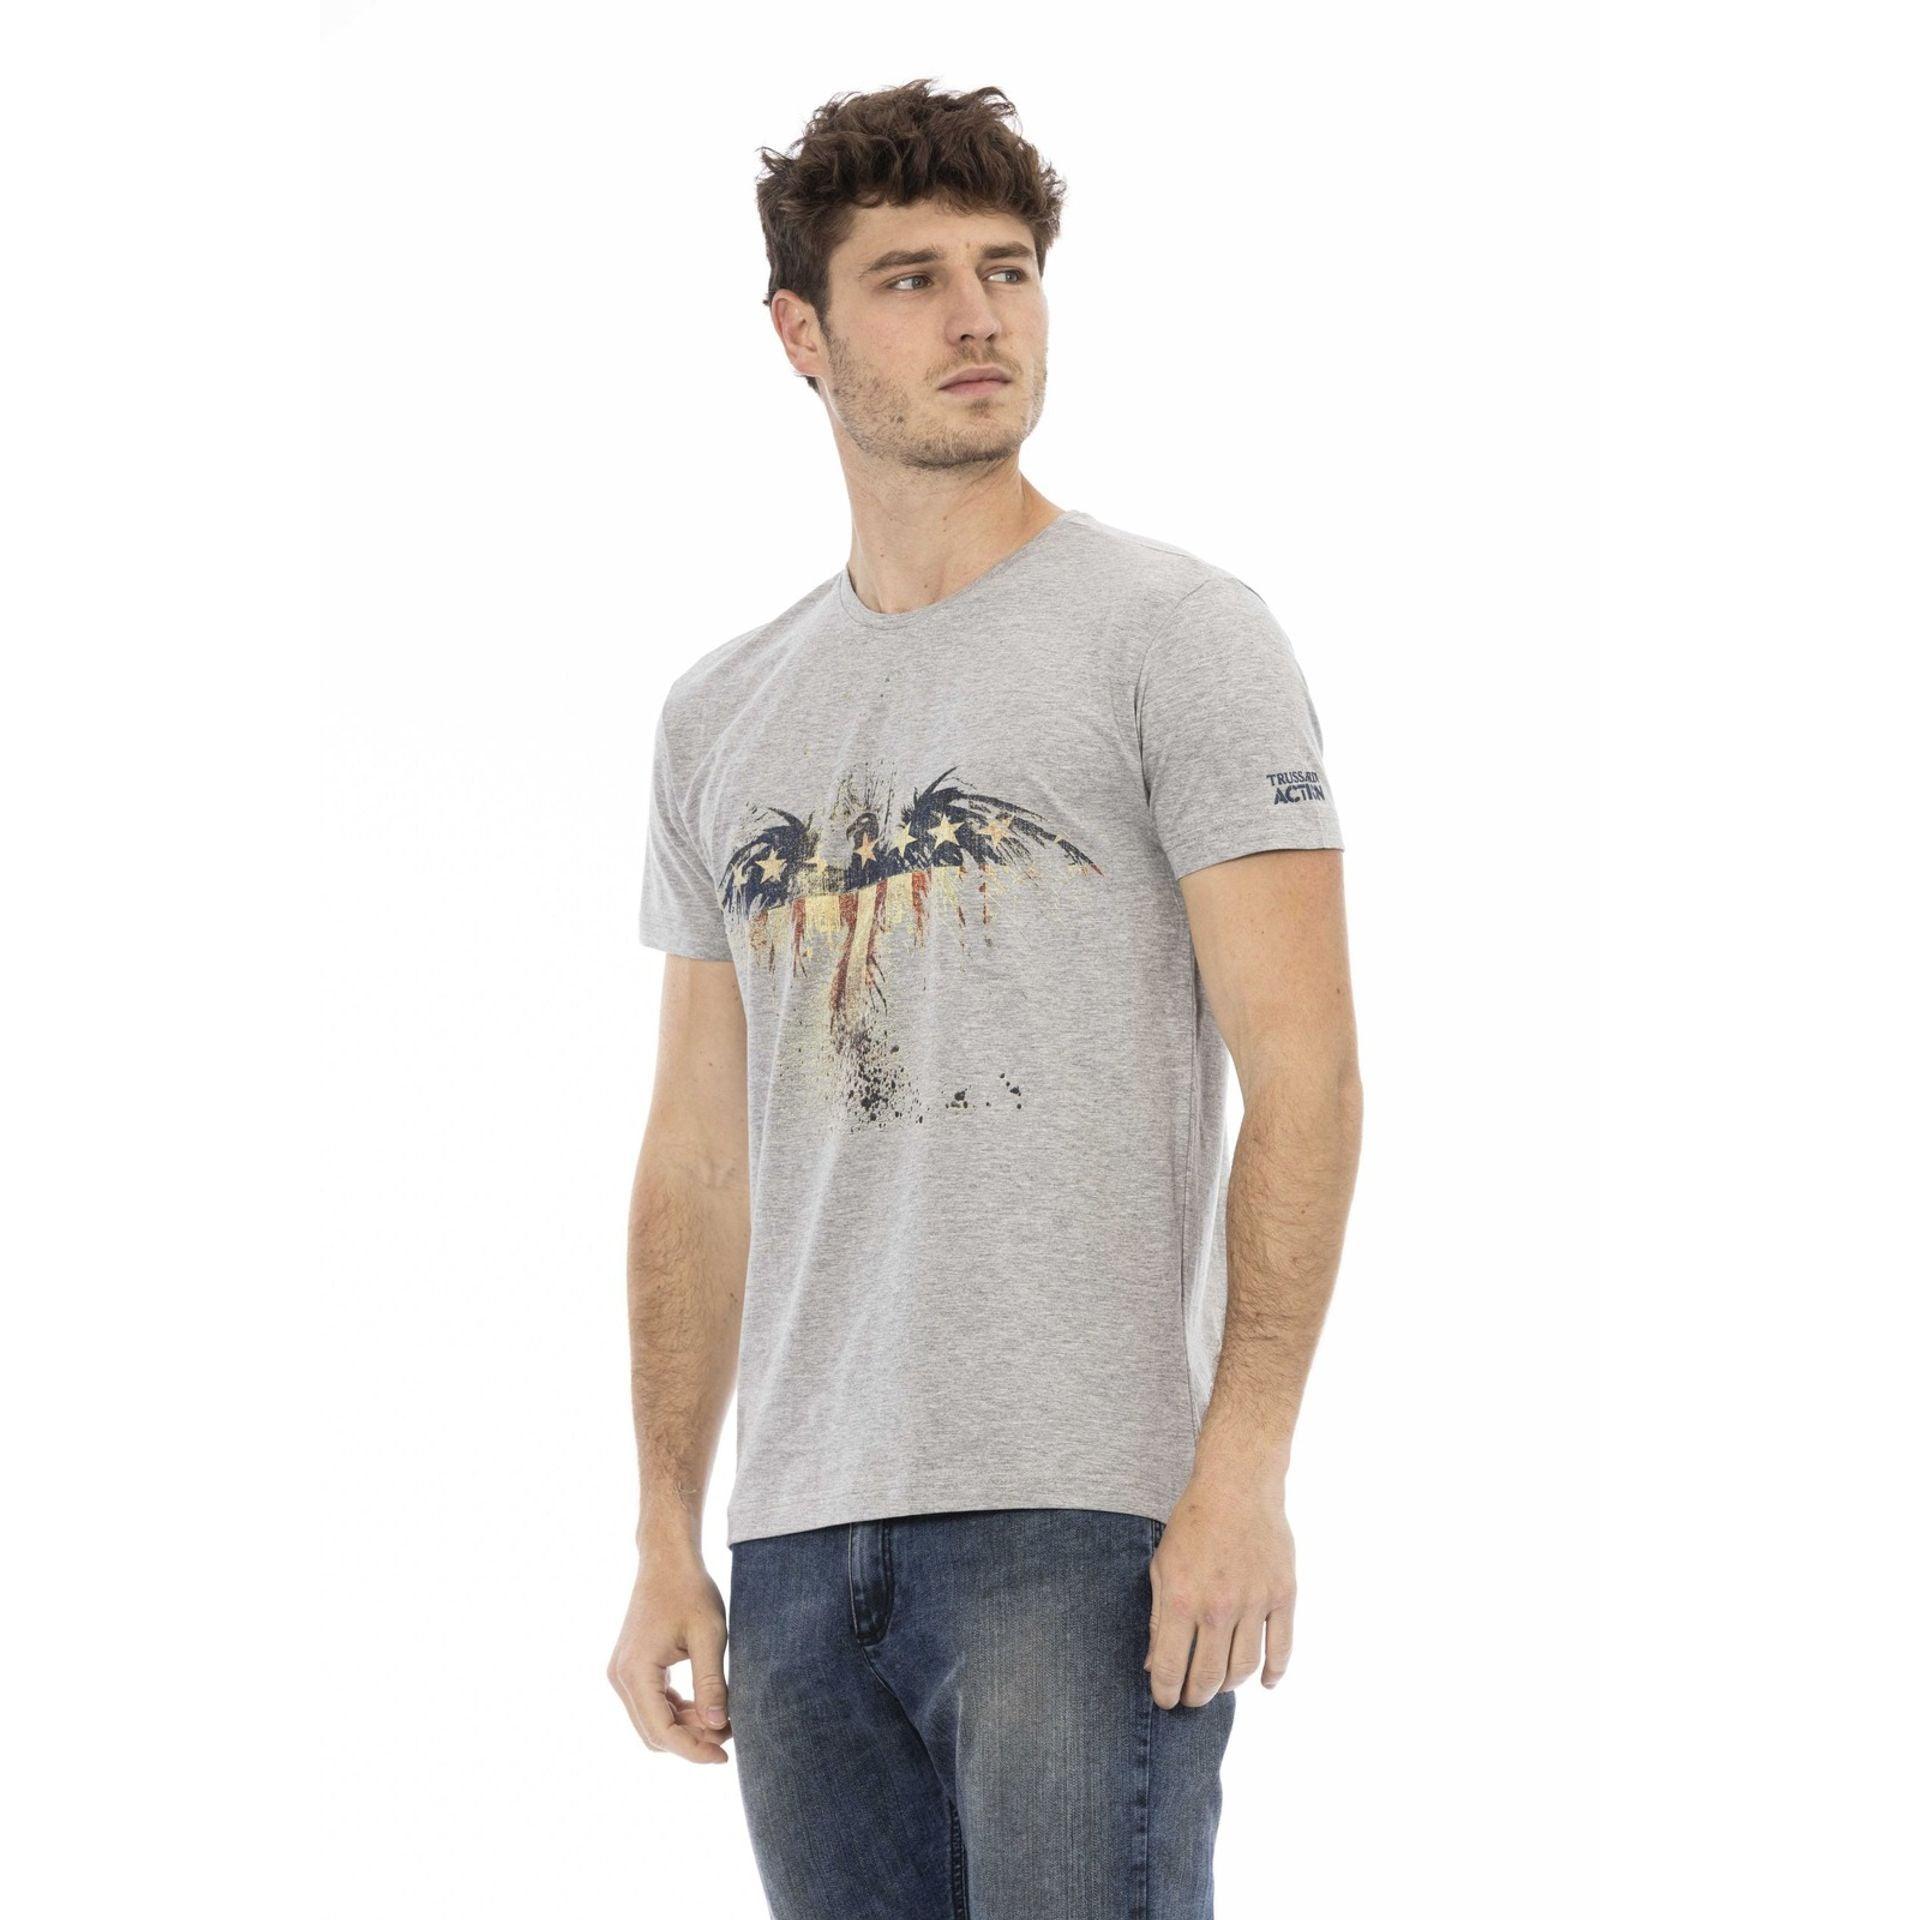 Trussardi Action Men T-shirts - Grey Brand T-shirts - T-Shirt - Guocali